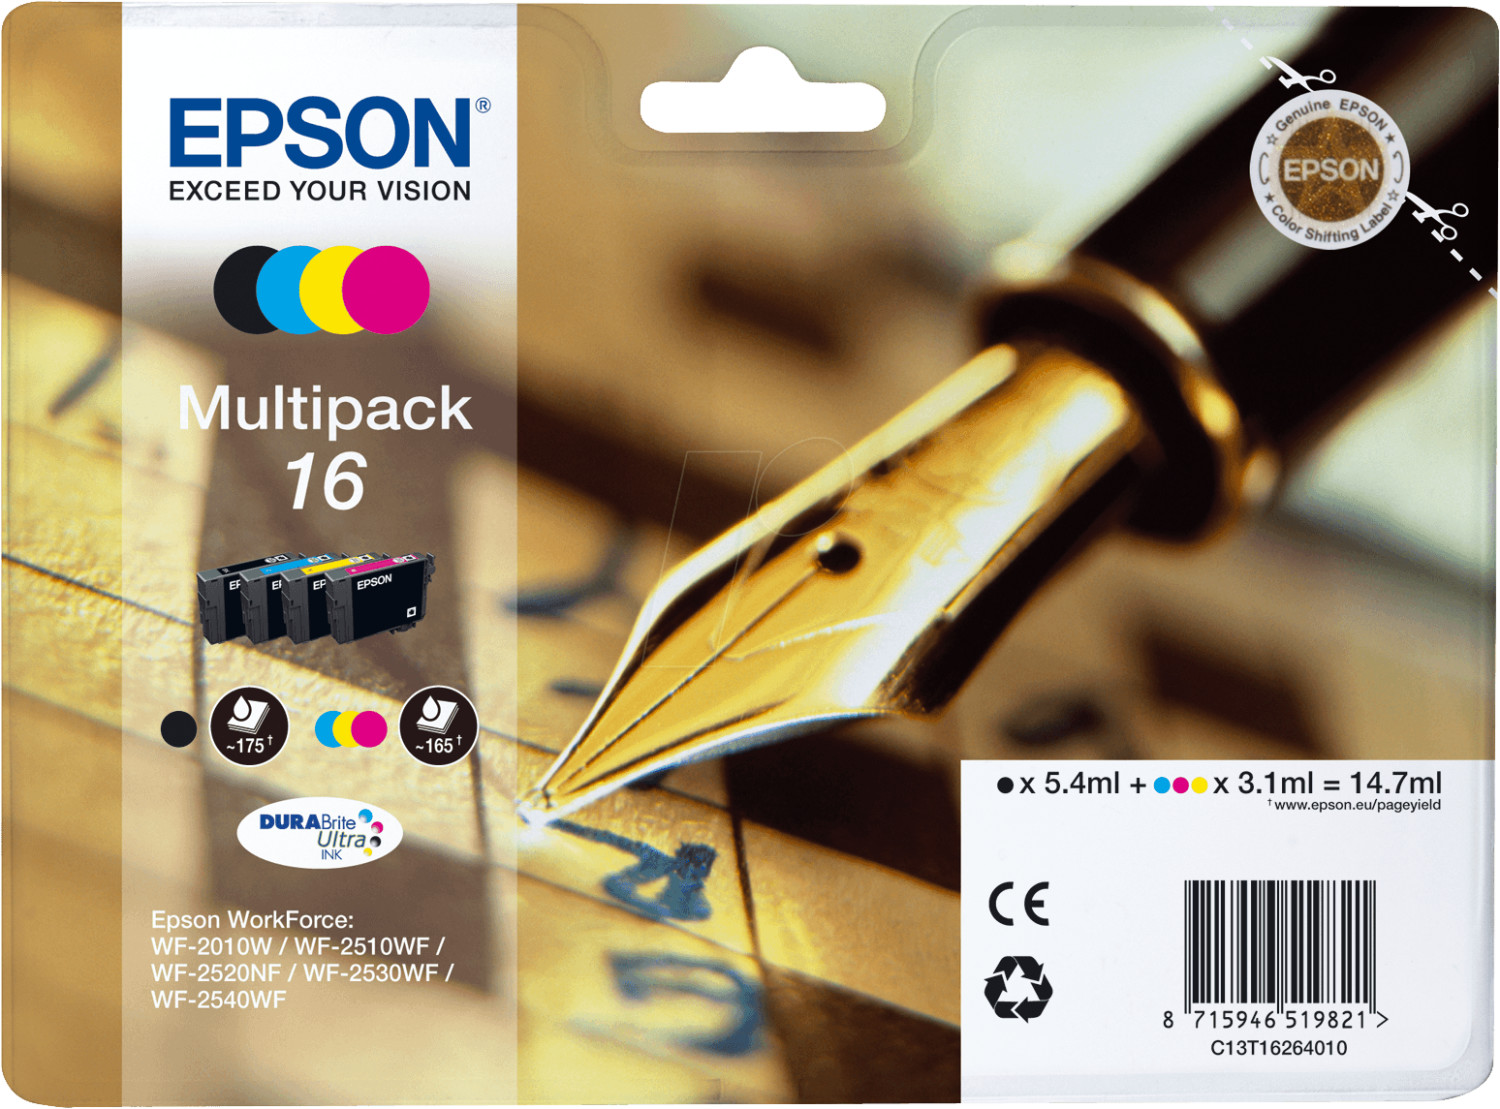 Multipack Preisvergleich 16 € 34,59 4-farbig bei | (C13T16264010) 2024 (Februar ab Epson Preise)